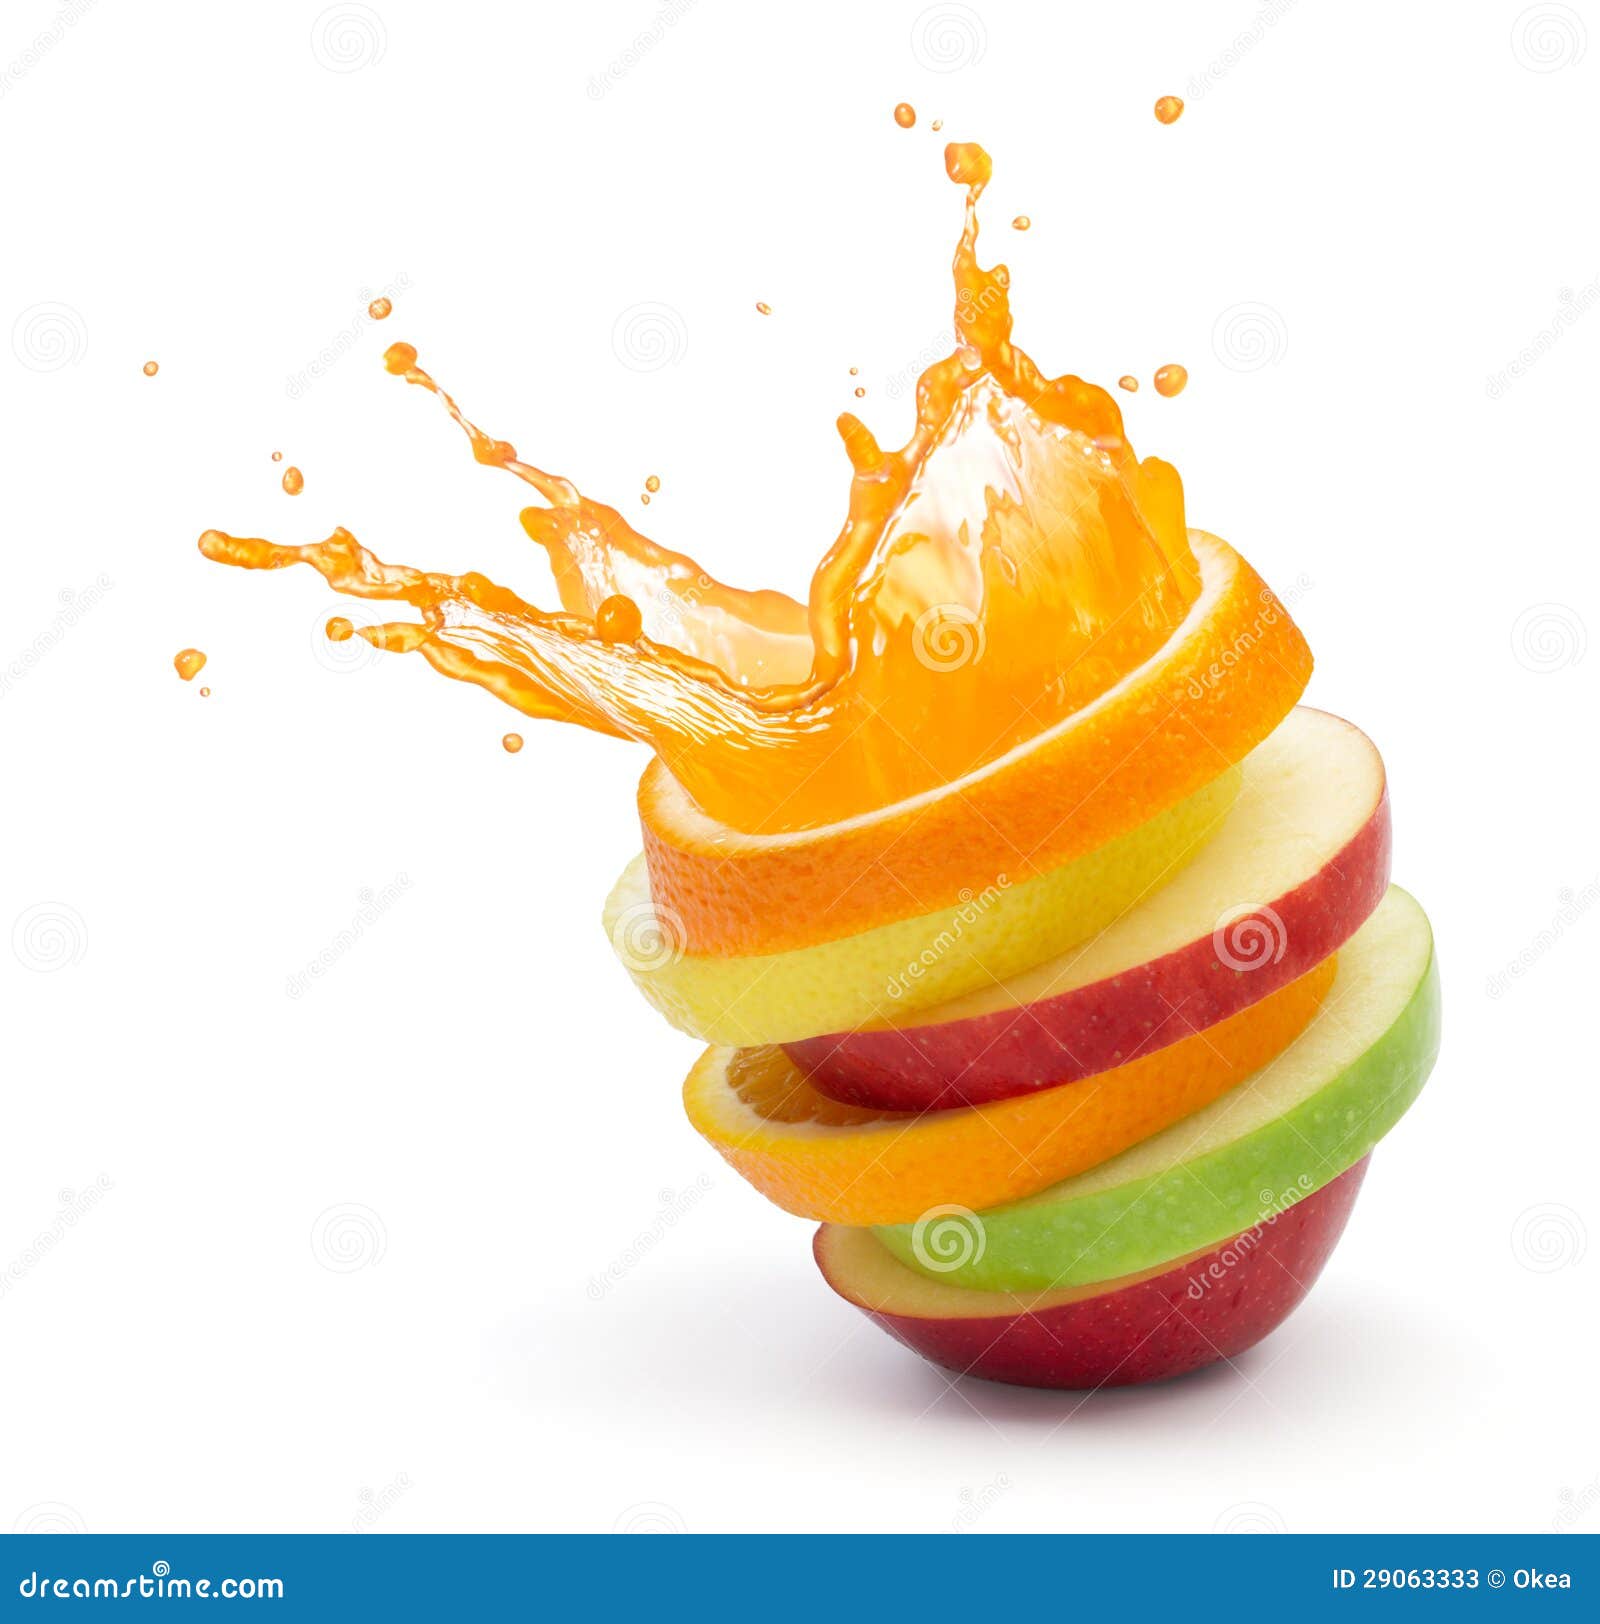 fruit punch clip art free - photo #32